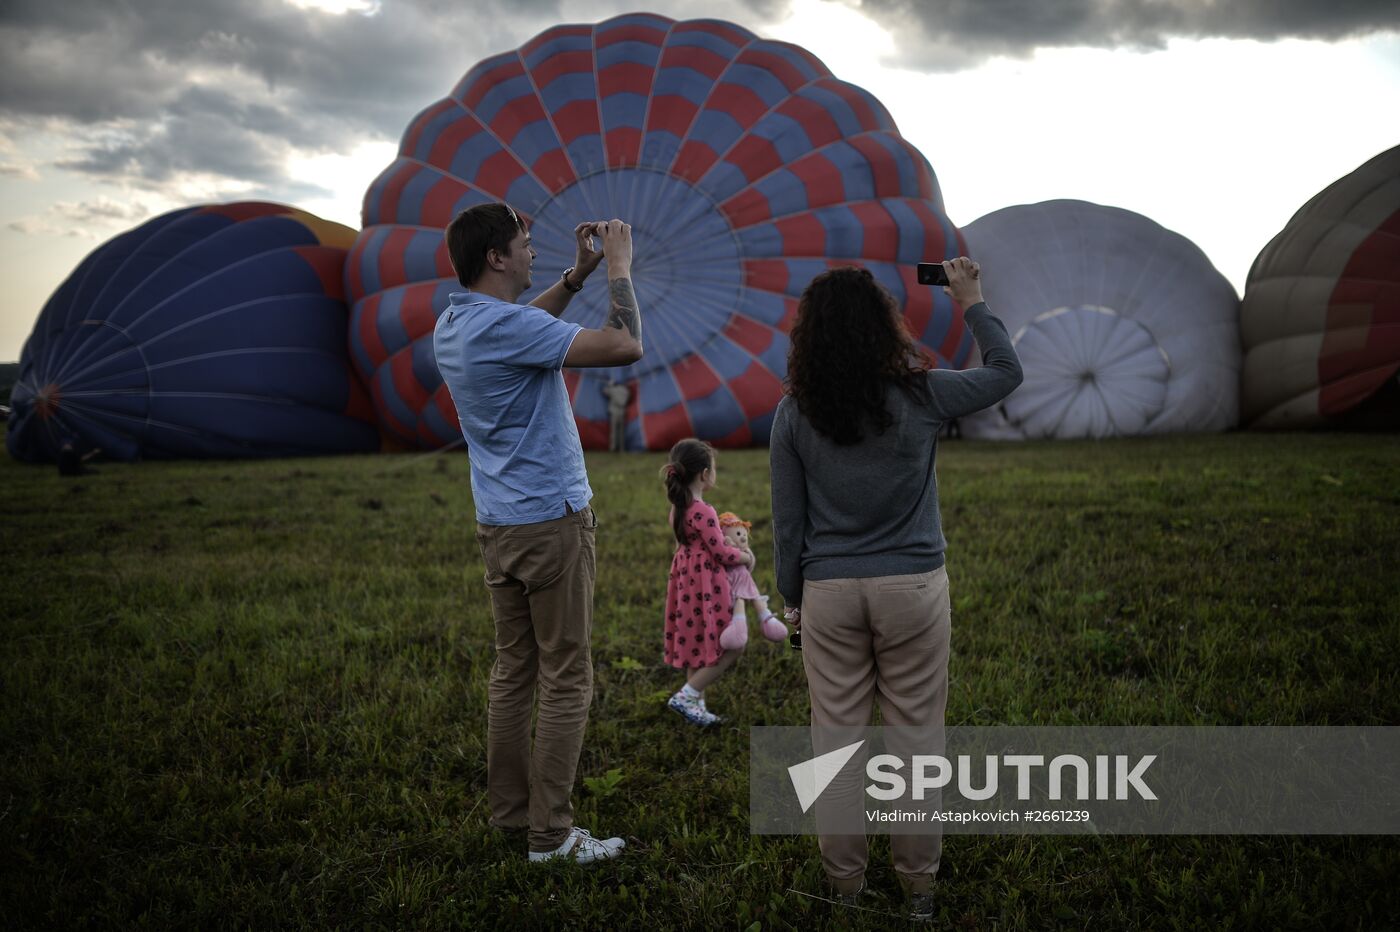 14th "Golden Ring of Russia" ballooning festival